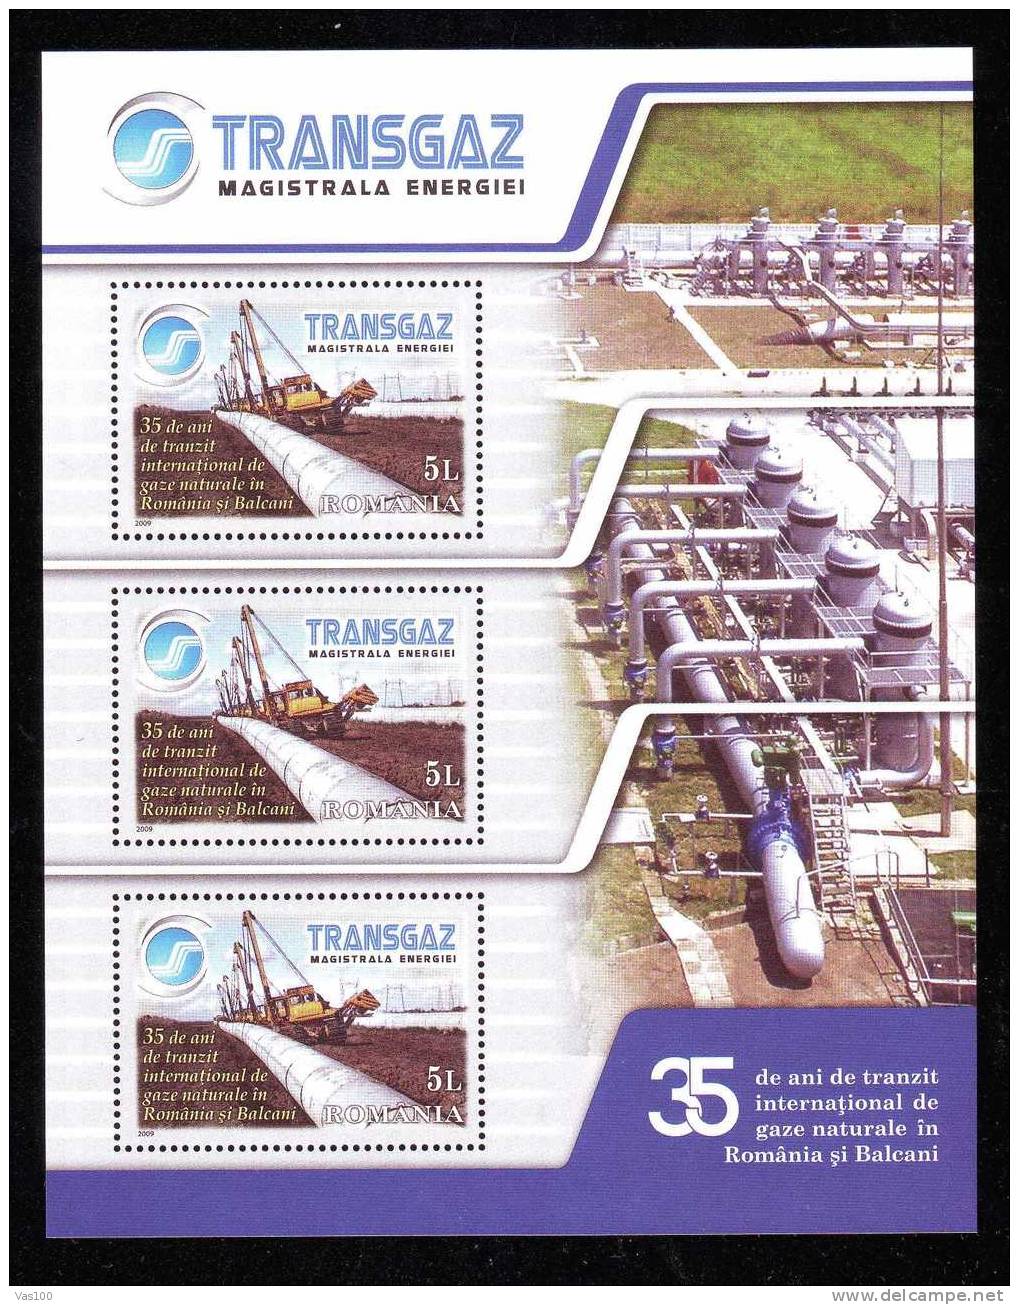 TRANSGAZ - GAZ - GAS- 2009 MINISHEET MNH Romania. - Gas